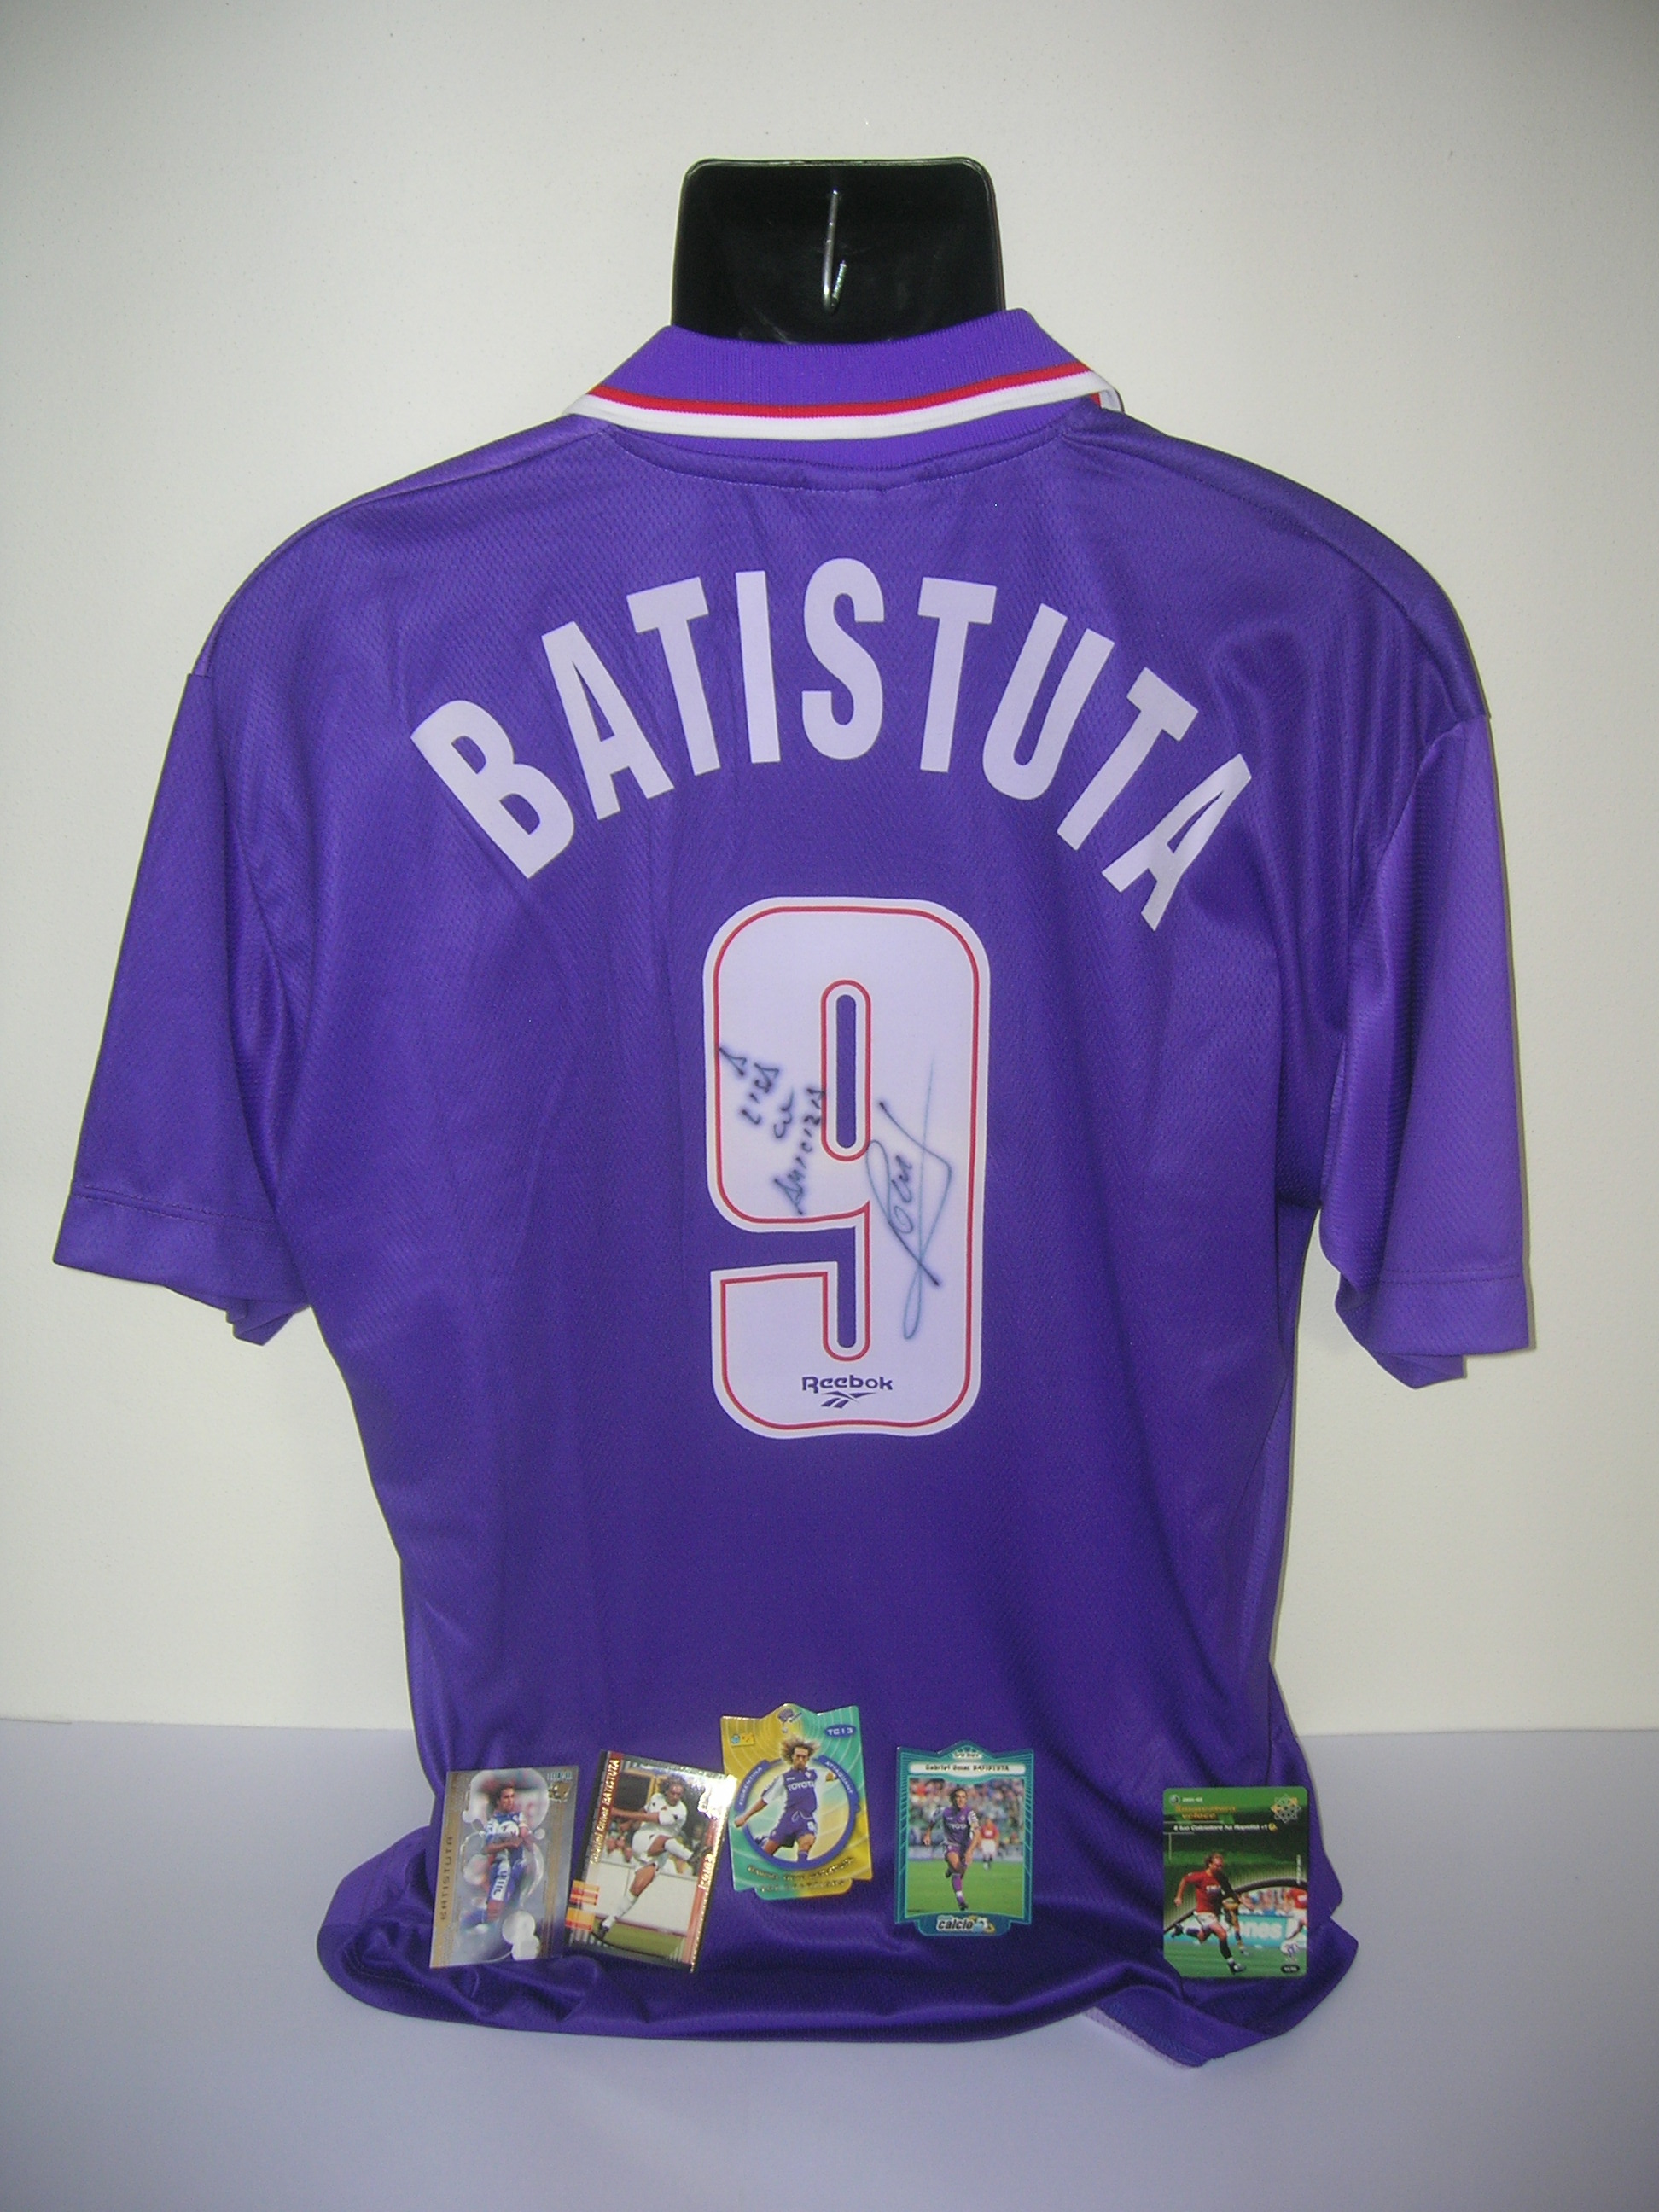 Batistuta G. n.9 Fiorentina D